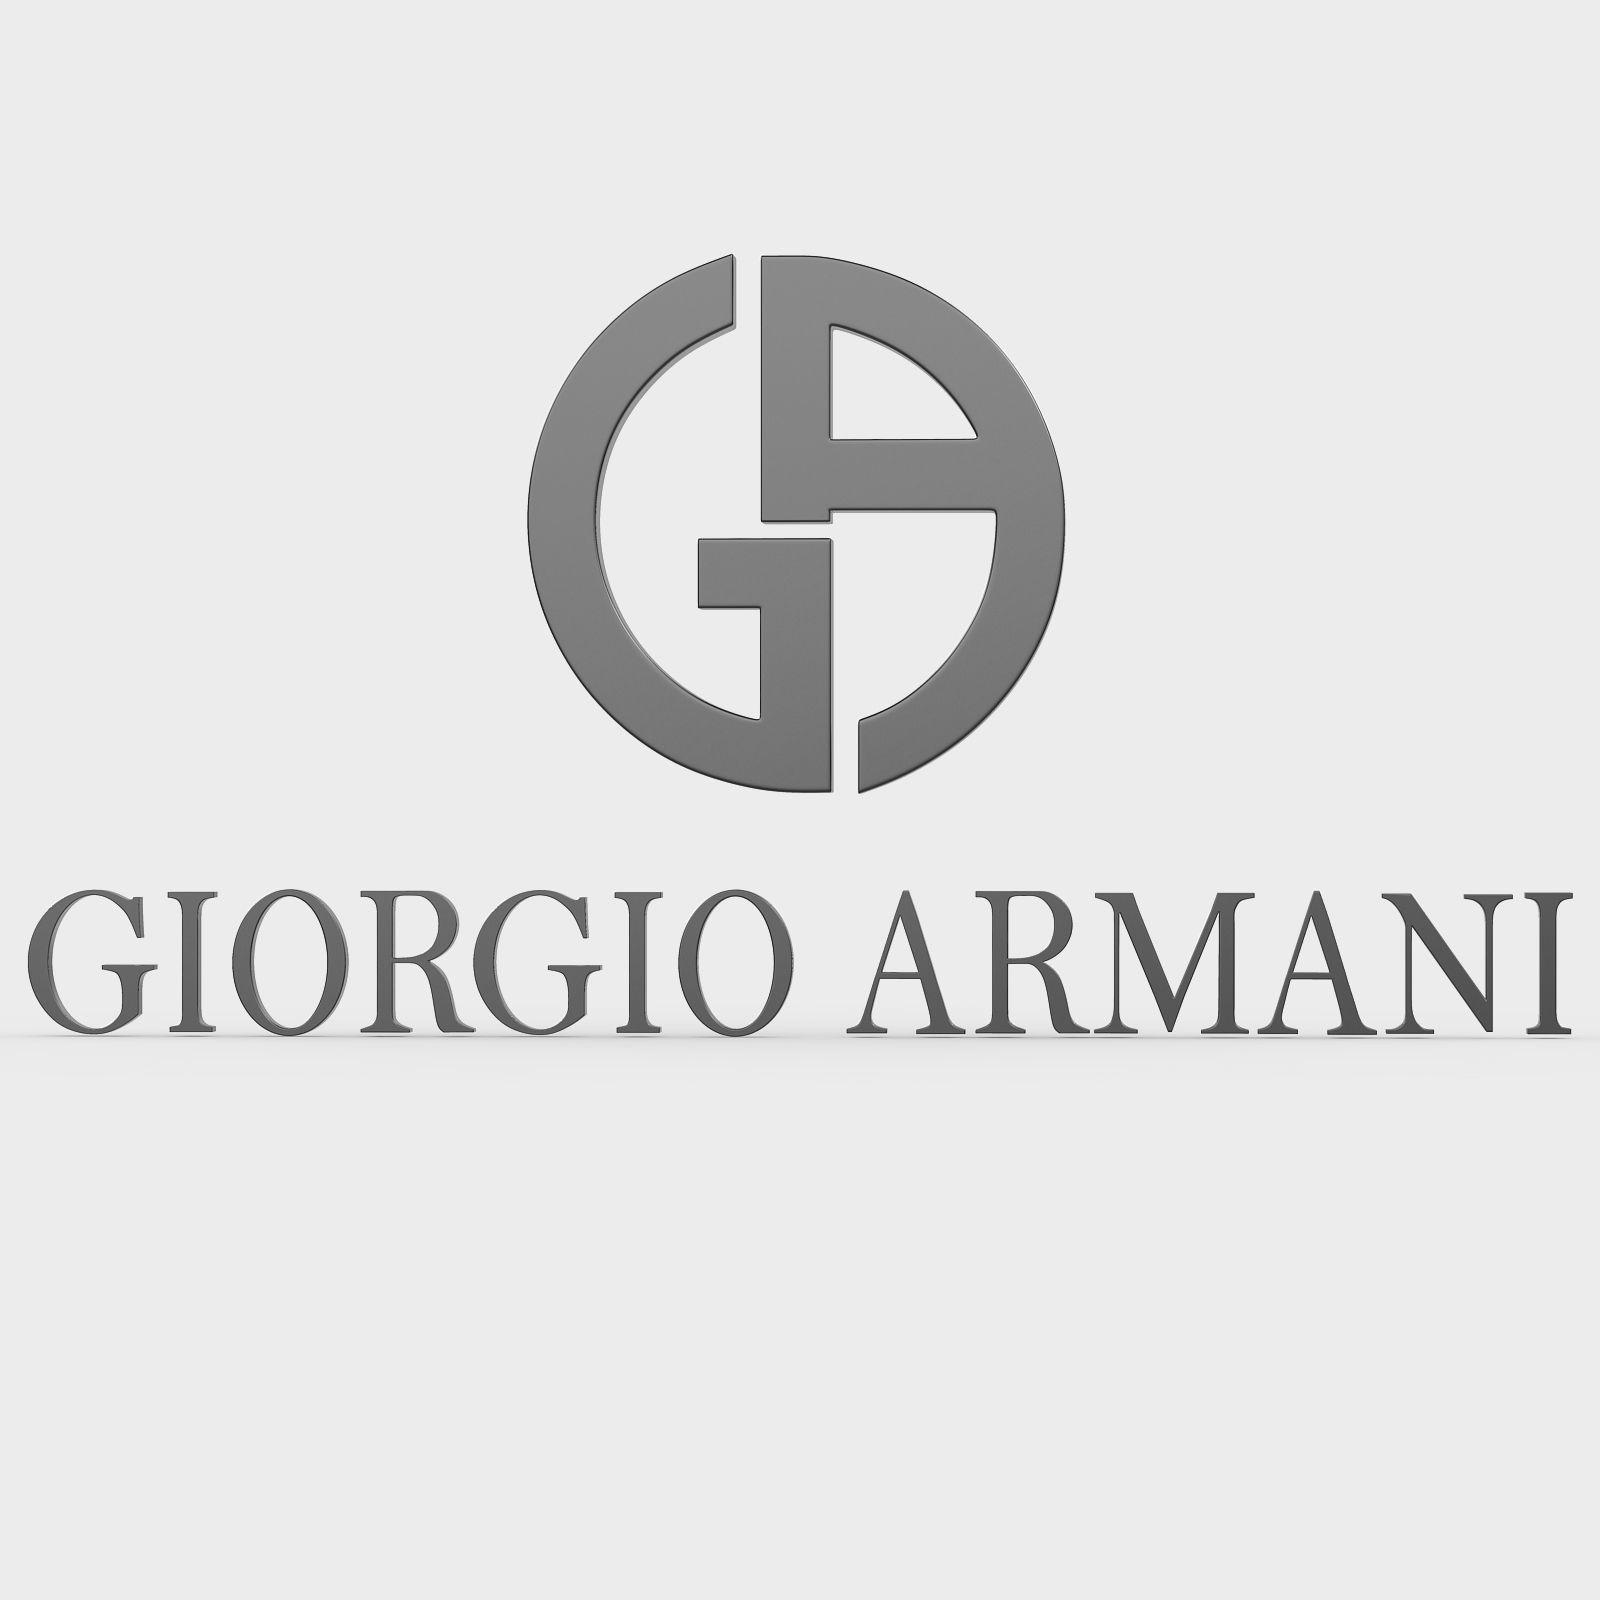 Giorgio Armani Logo - giorgio armani logo 3D model